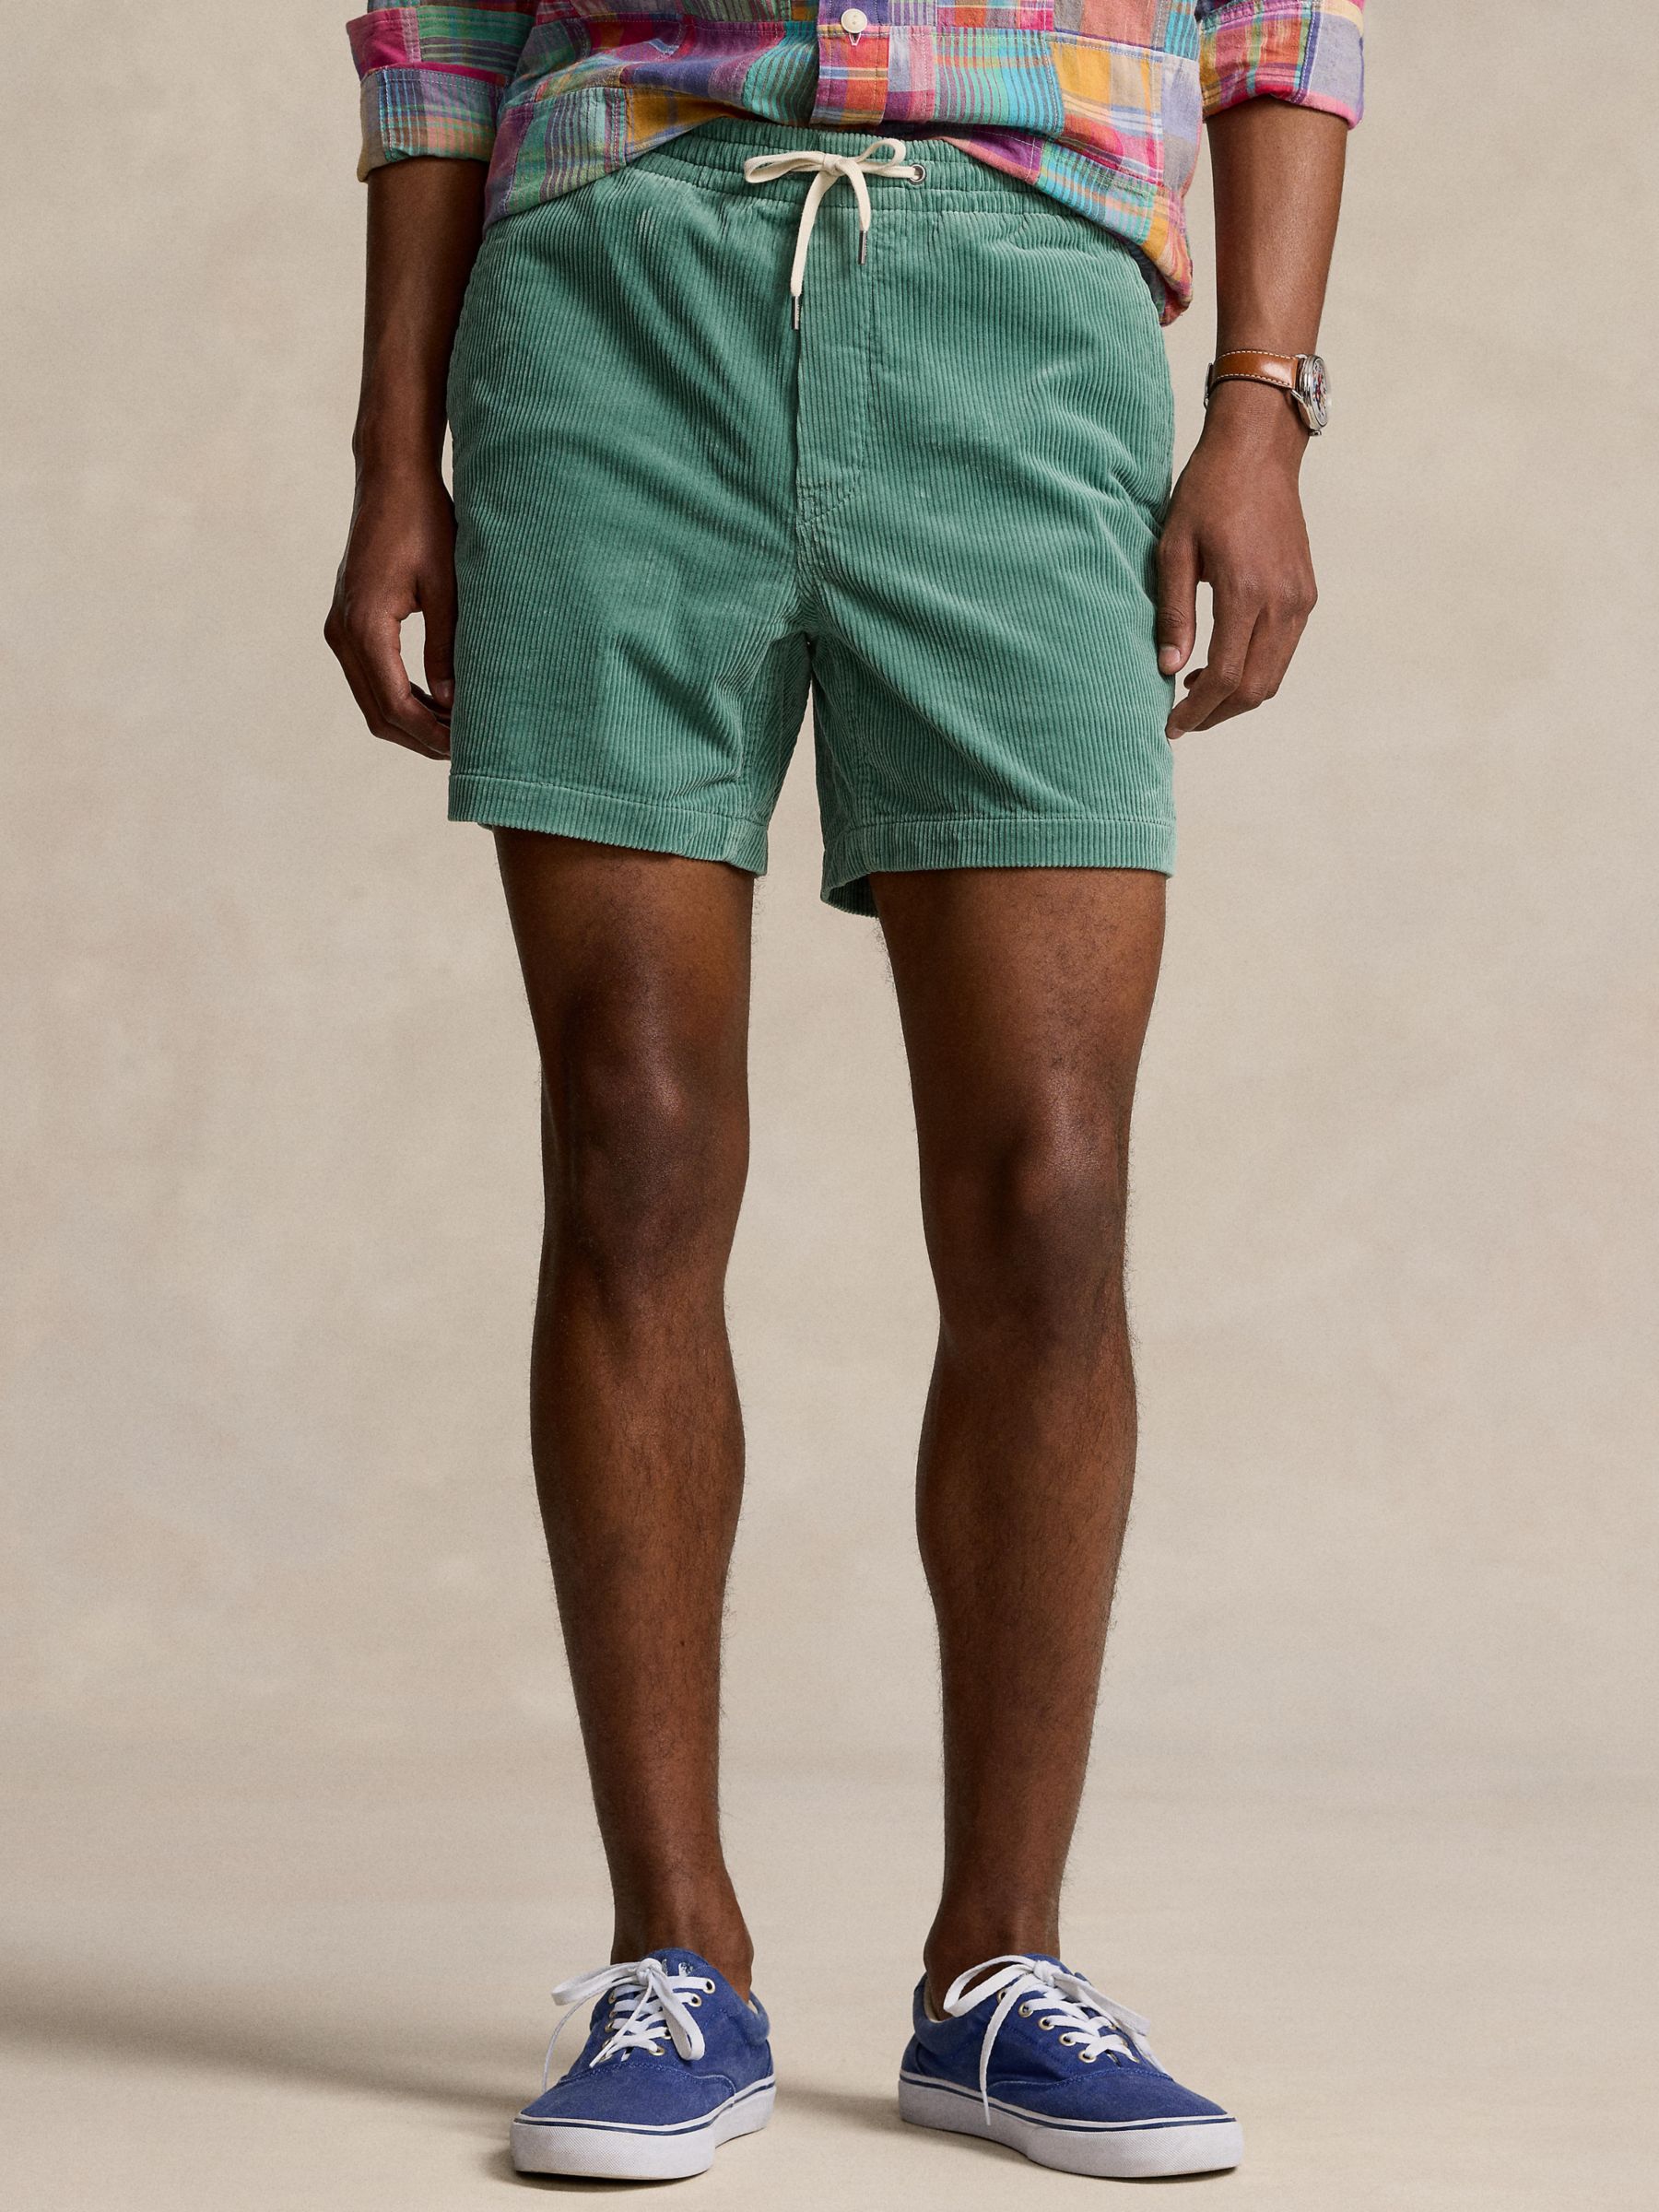 Ralph Lauren 6-Inch Polo Prepster Corduroy Shorts, Seafoam Green, S